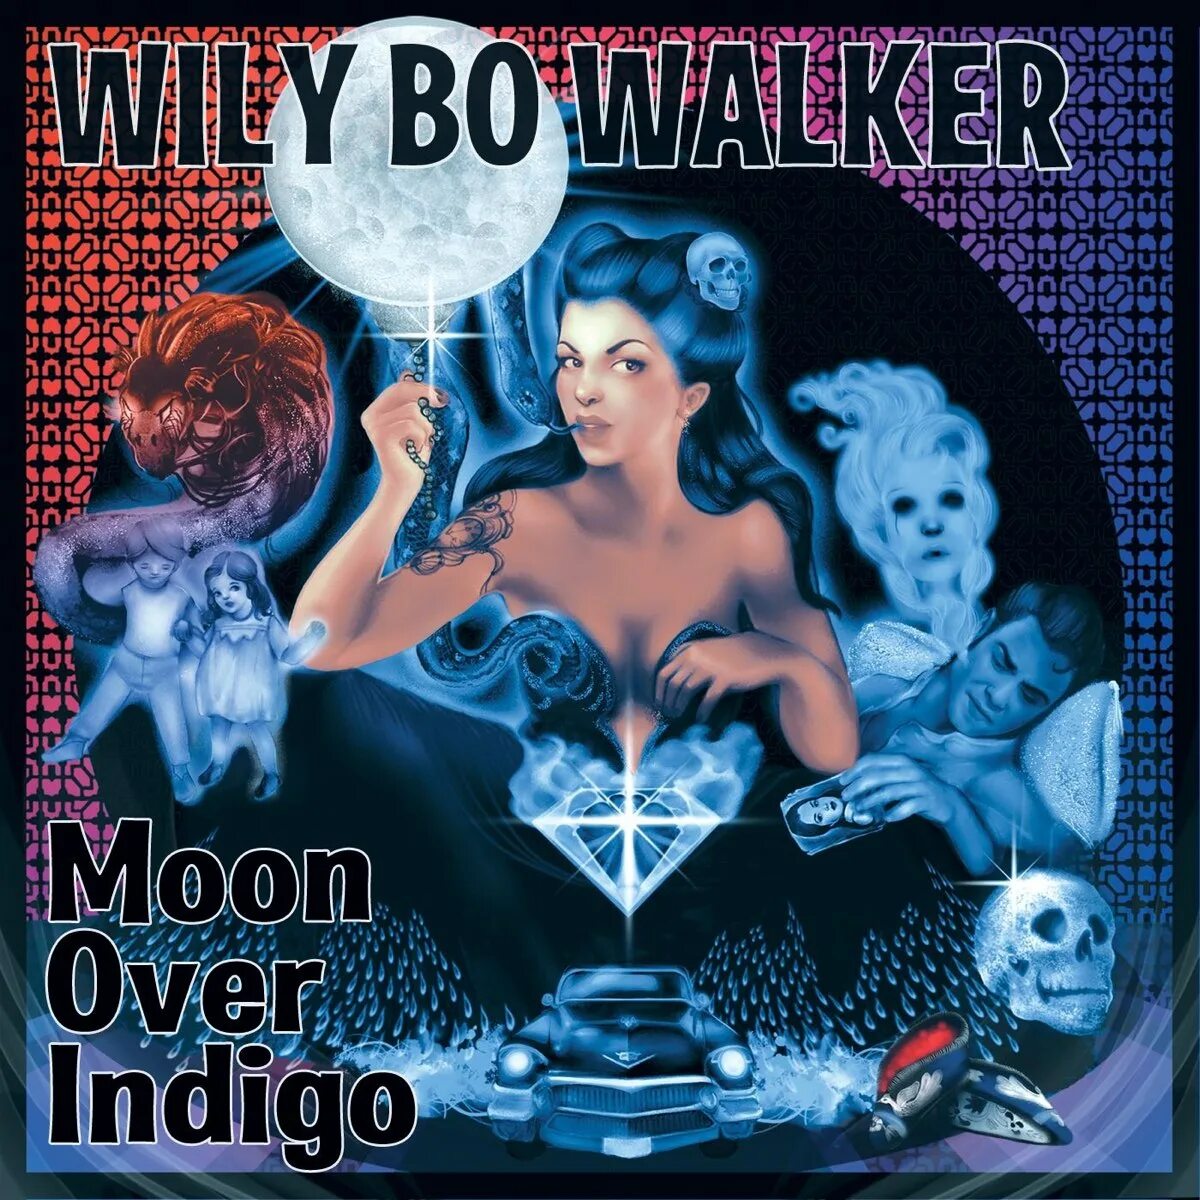 Wily bo Walker. Over the Moon альбом. Музыка Wily bo Walker foto. Indigo album Cover. Овер мун